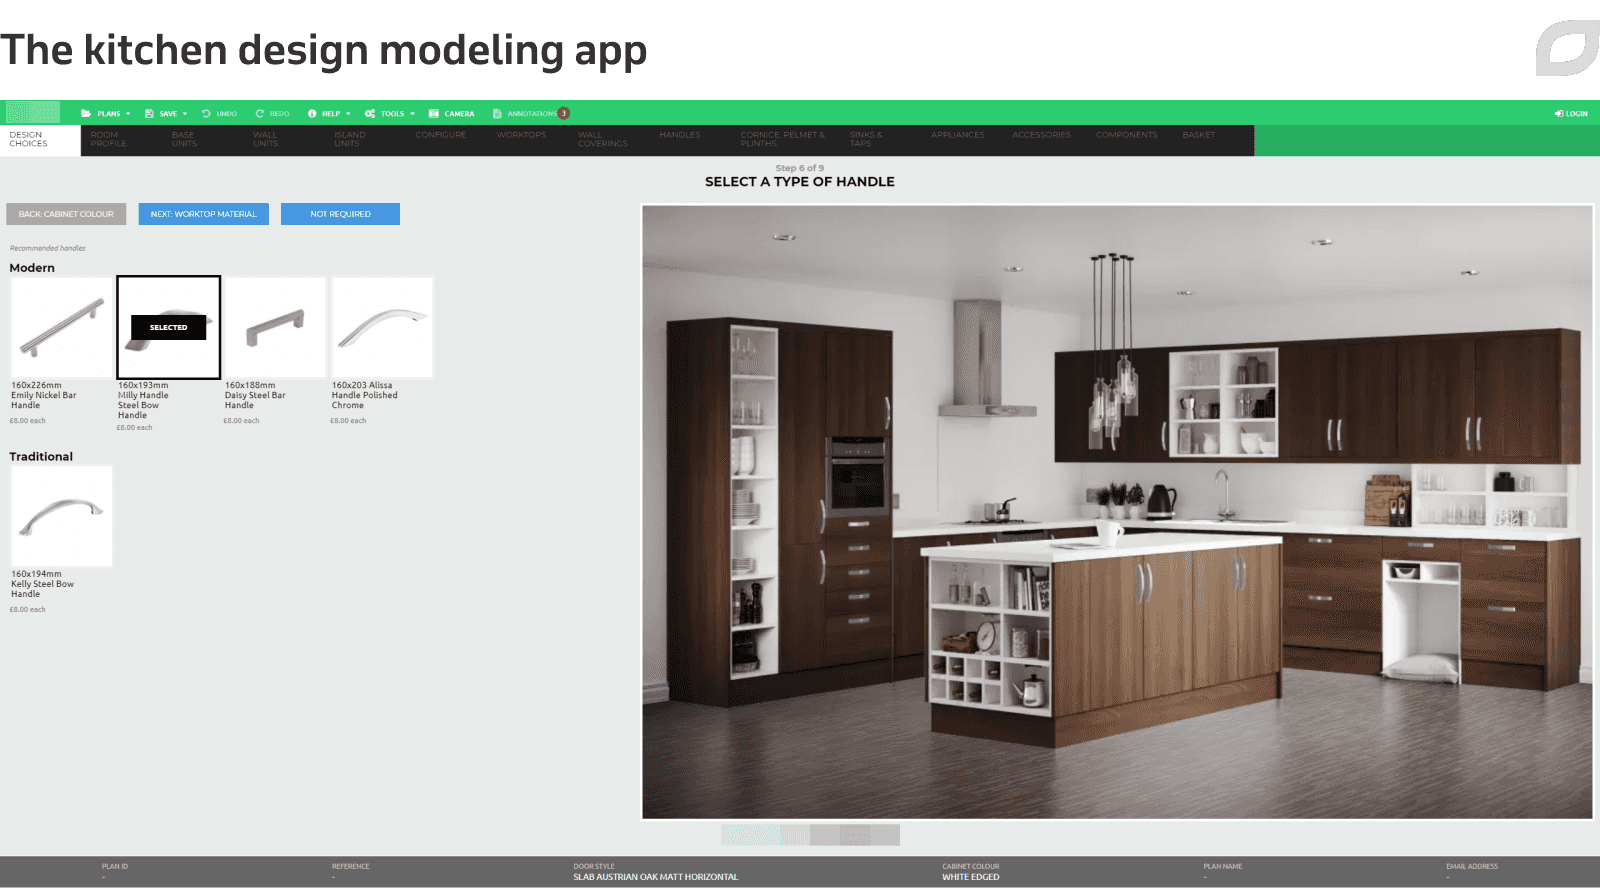 The kitchen design modeling app